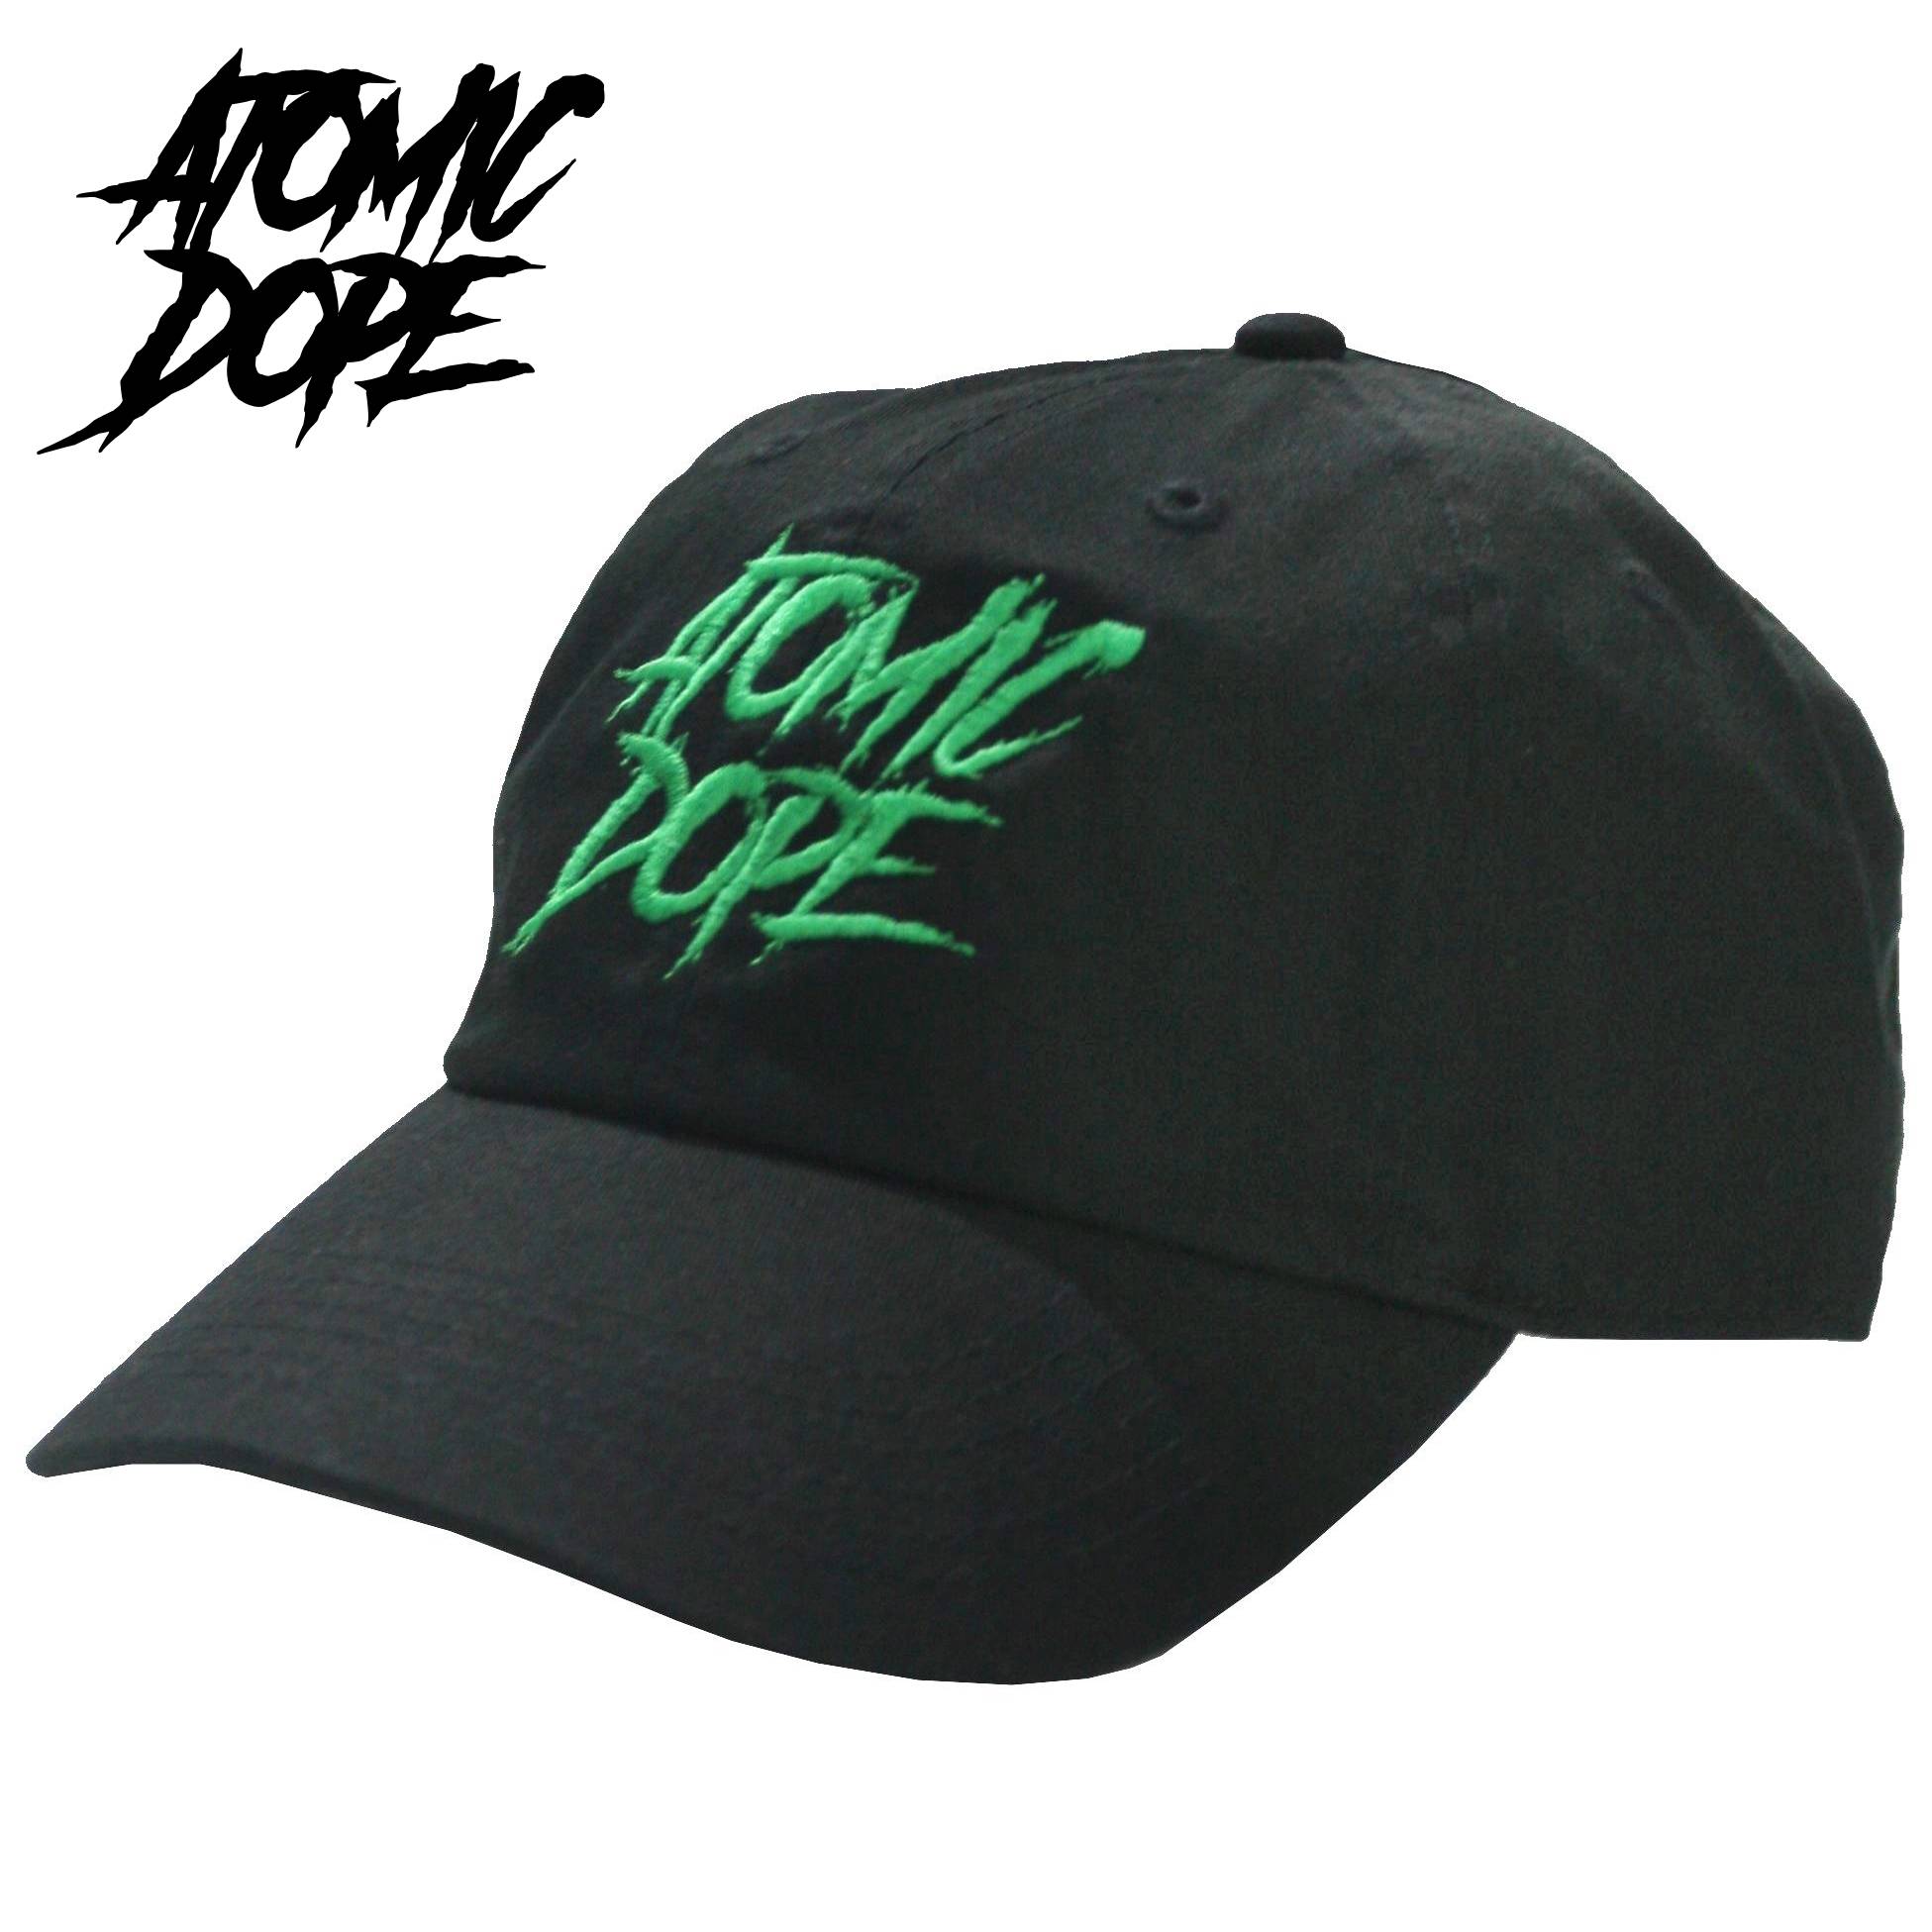 Atomicdope Revenge Low Cap Black/Green ローキャップ ブラック/グリーン 帽子 黒/緑 アトミックドープ フリーサイズ